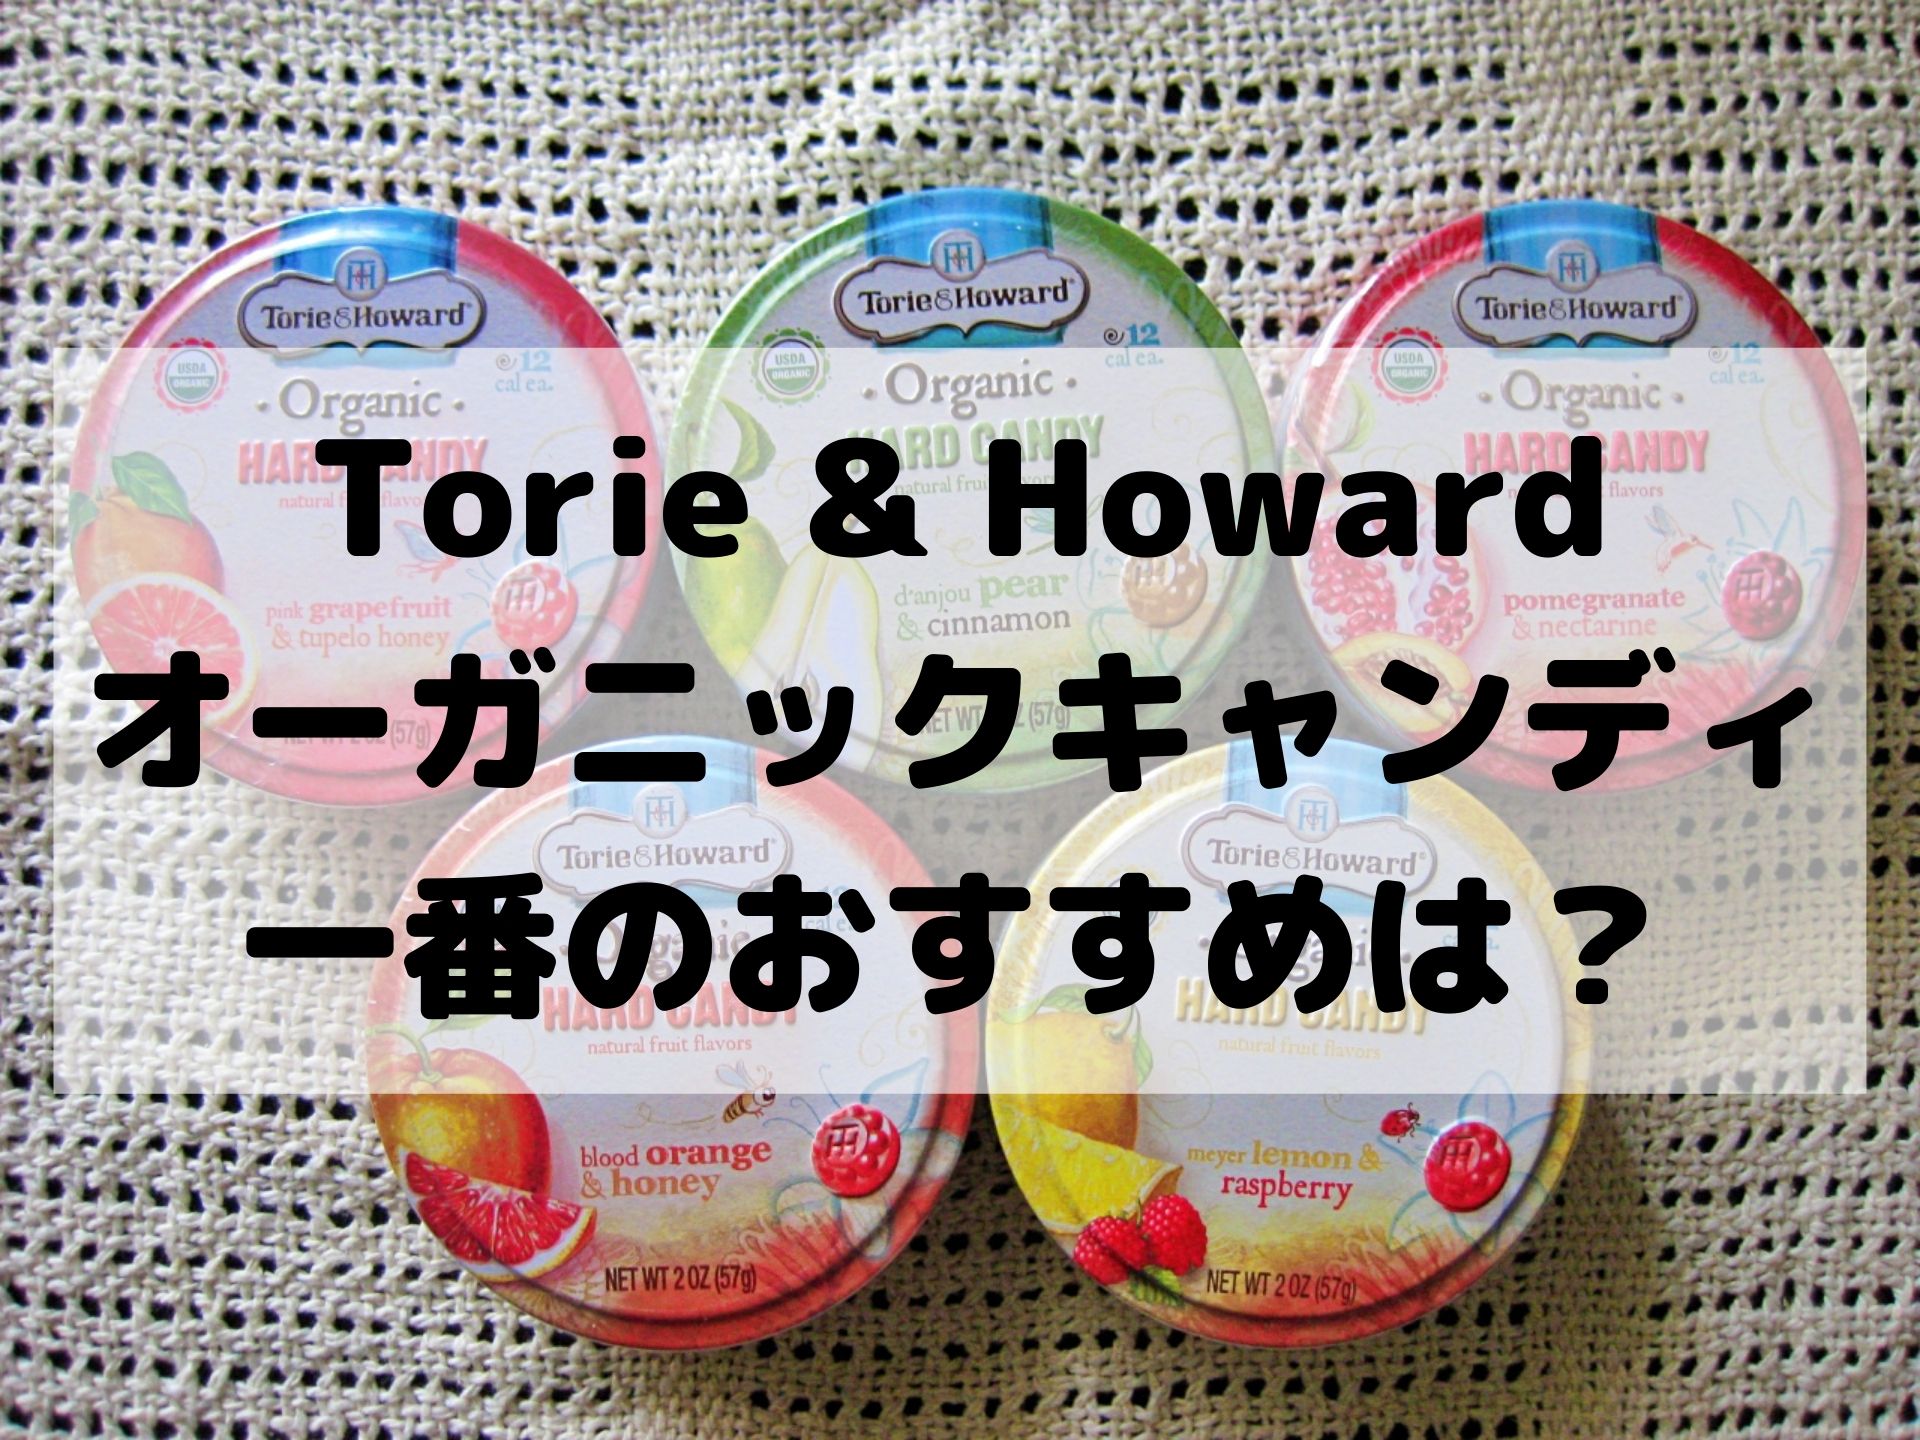 Torie & Howard Organic Hard Candy